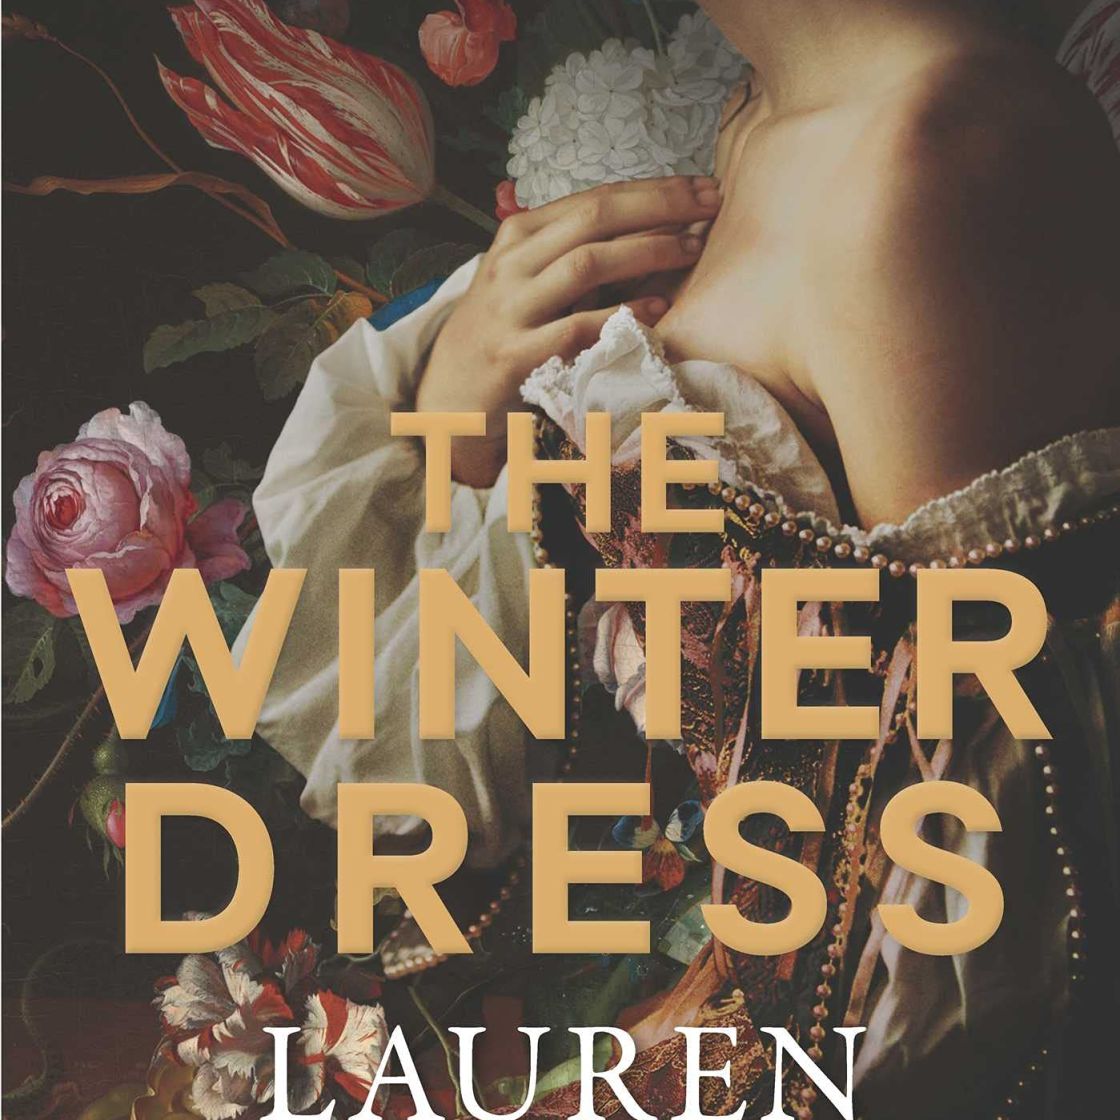 THE WINTER DRESS by Rachel Nightingale